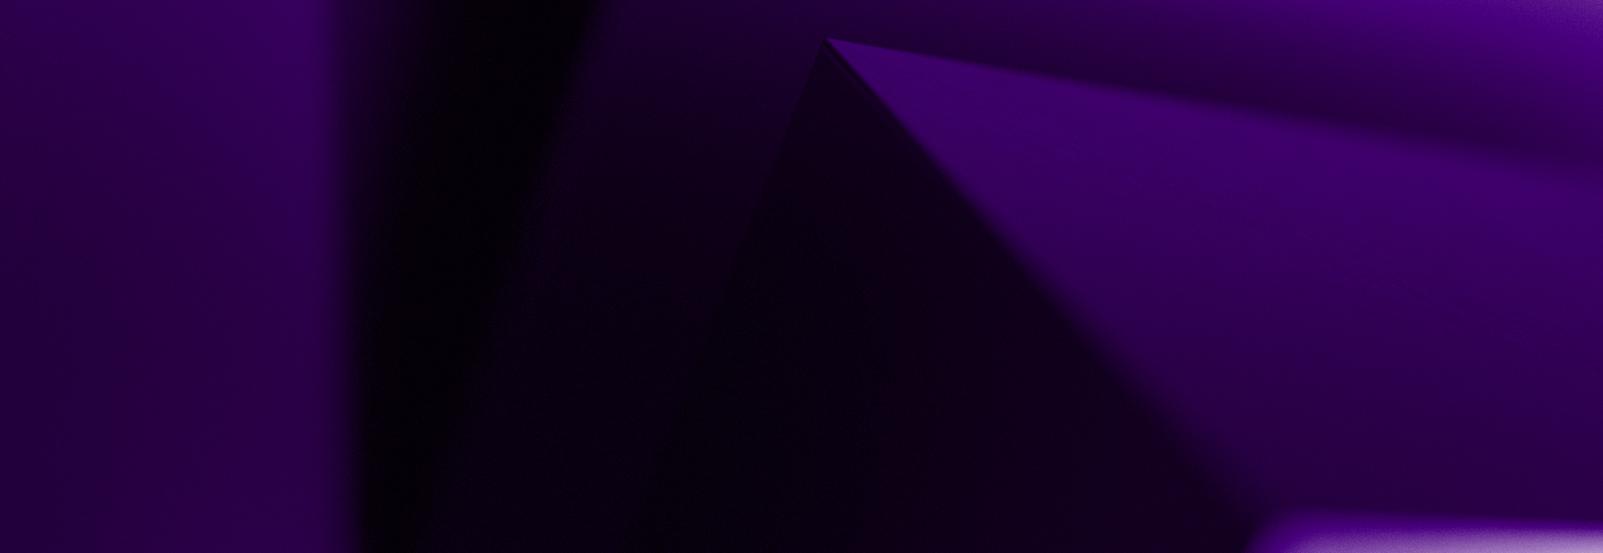 rra-background-purple-6.jpg